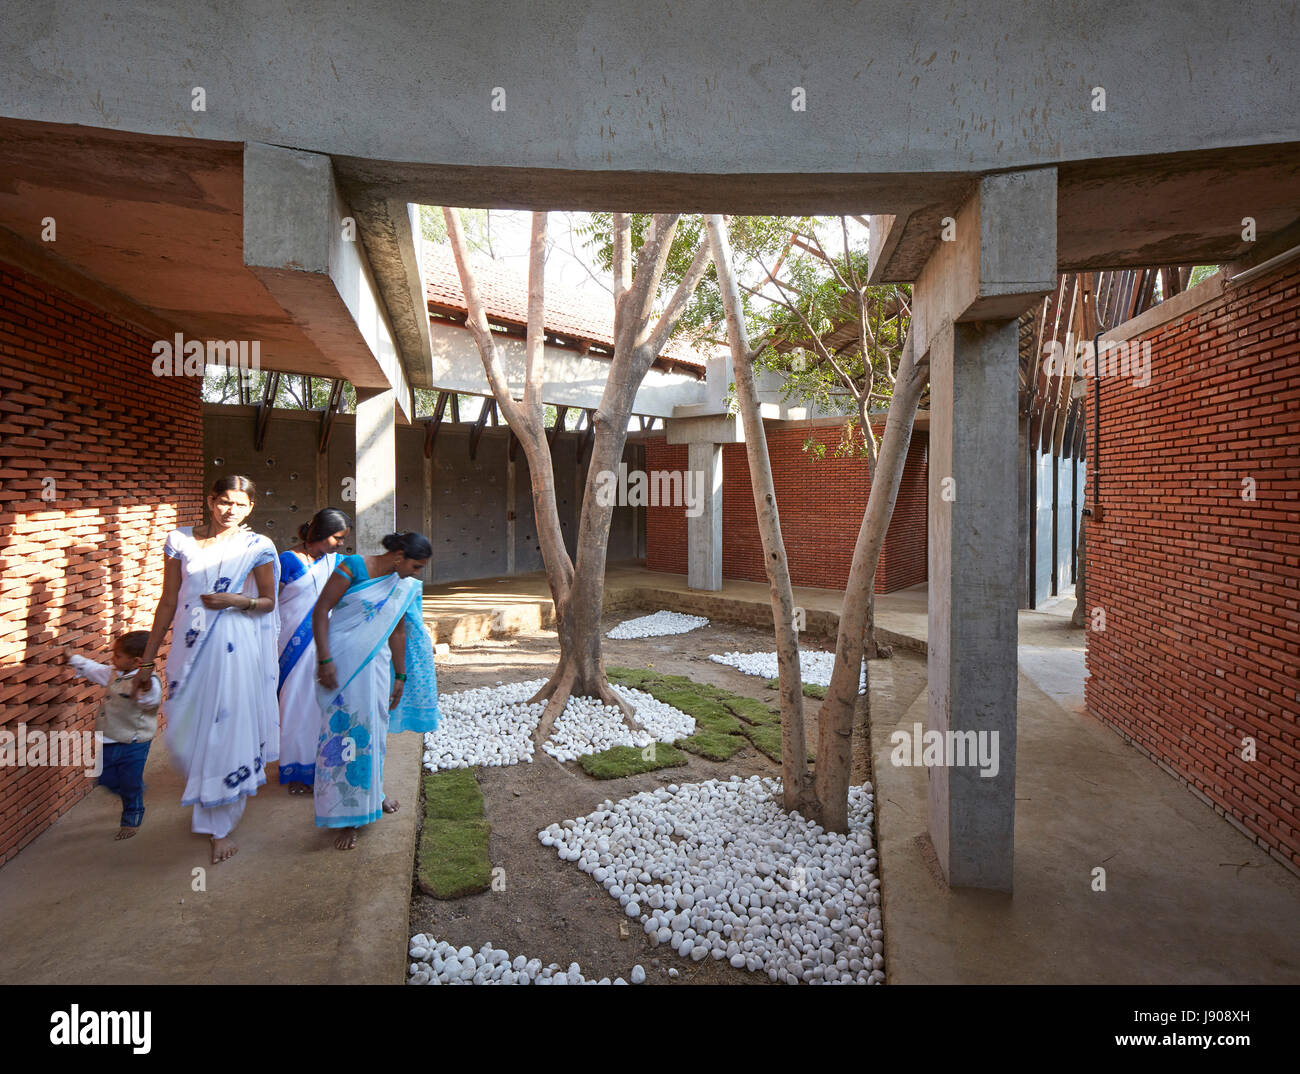 Local ladies visiting centre. Jetvanaa, Sakharwadi, India. Architect: SP+a , 2016. Stock Photo